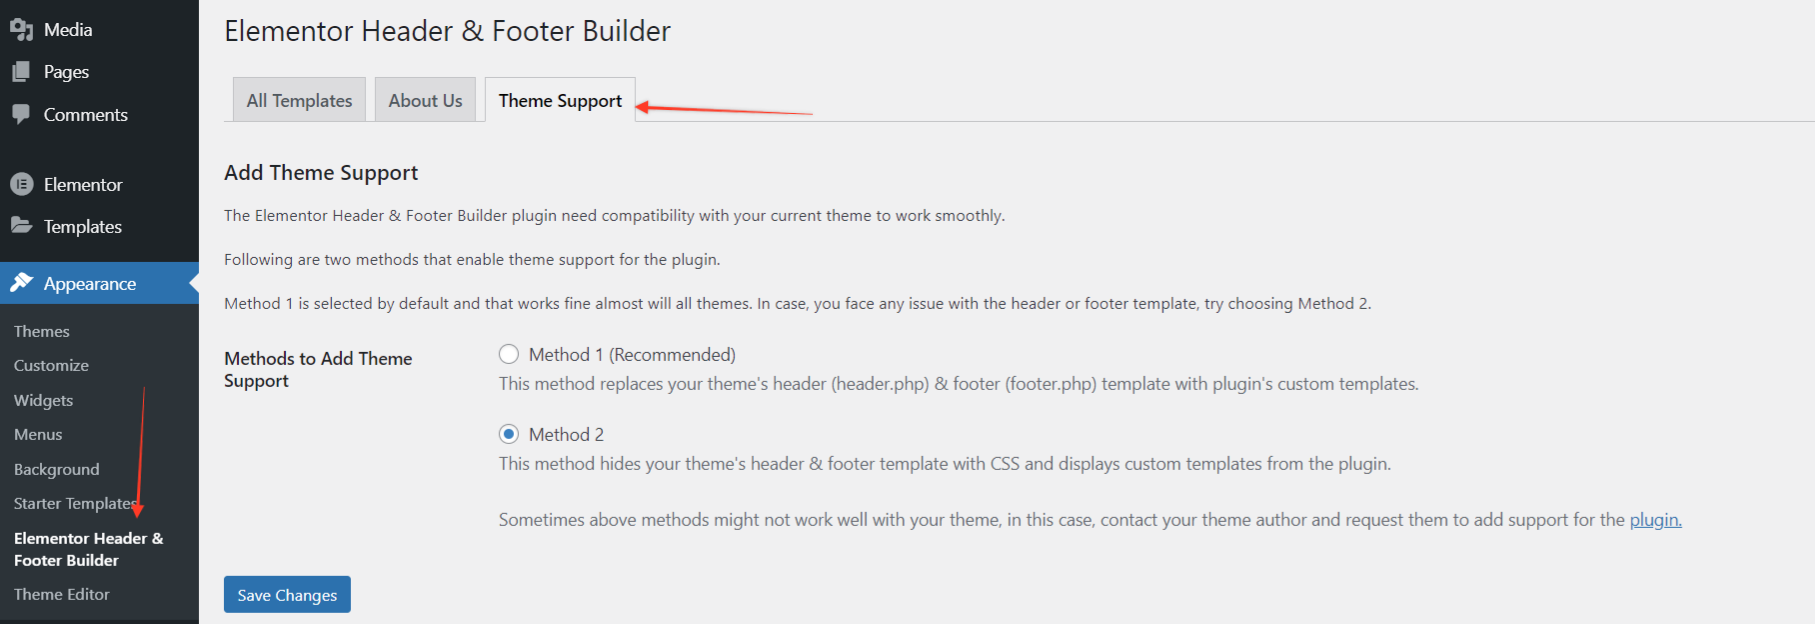 Elementor Header & Footer Builder theme support settings